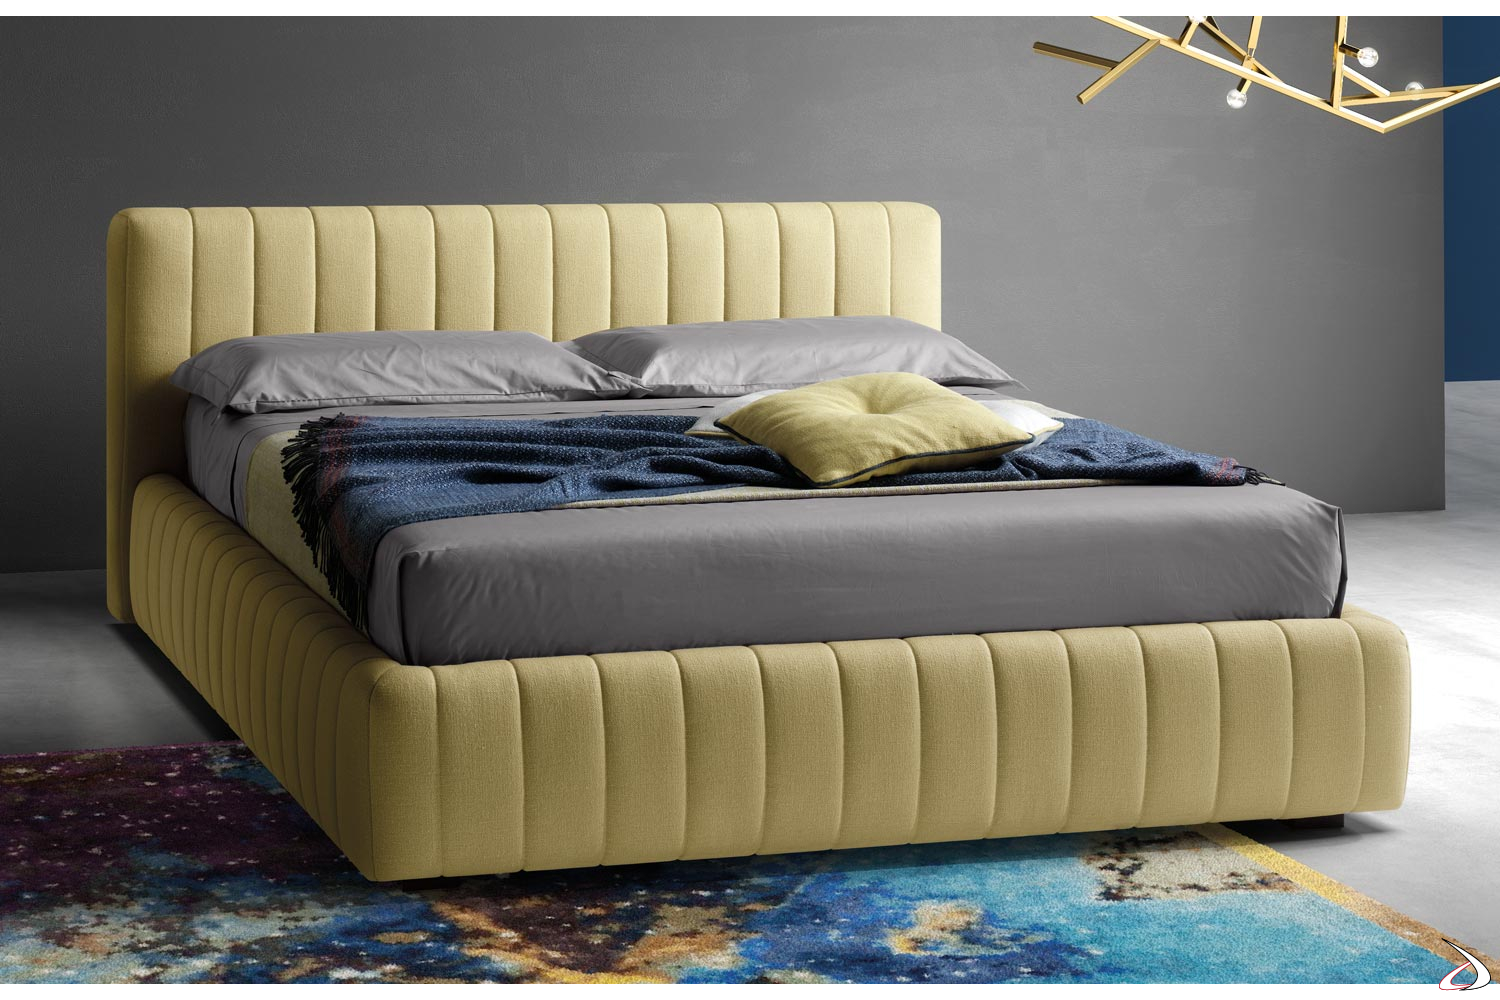 Letto Contenitore King Size.Nico Quilted Design Bed Toparredi Arredo Design Online